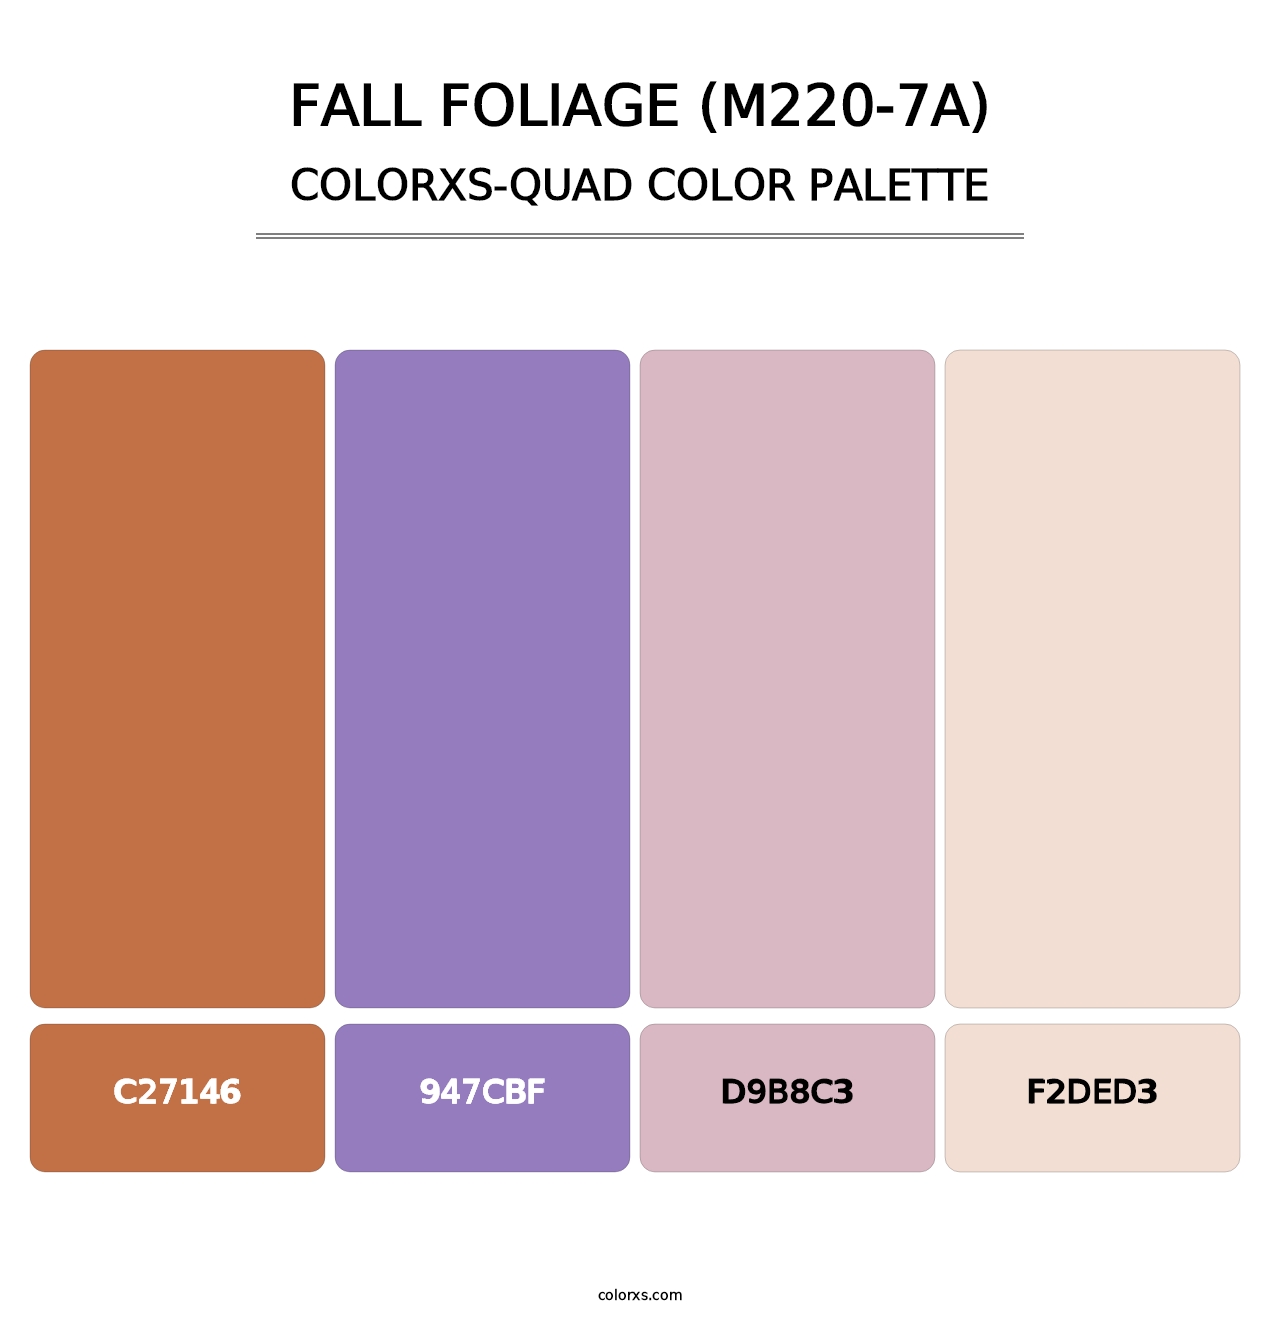 Fall Foliage (M220-7A) - Colorxs Quad Palette